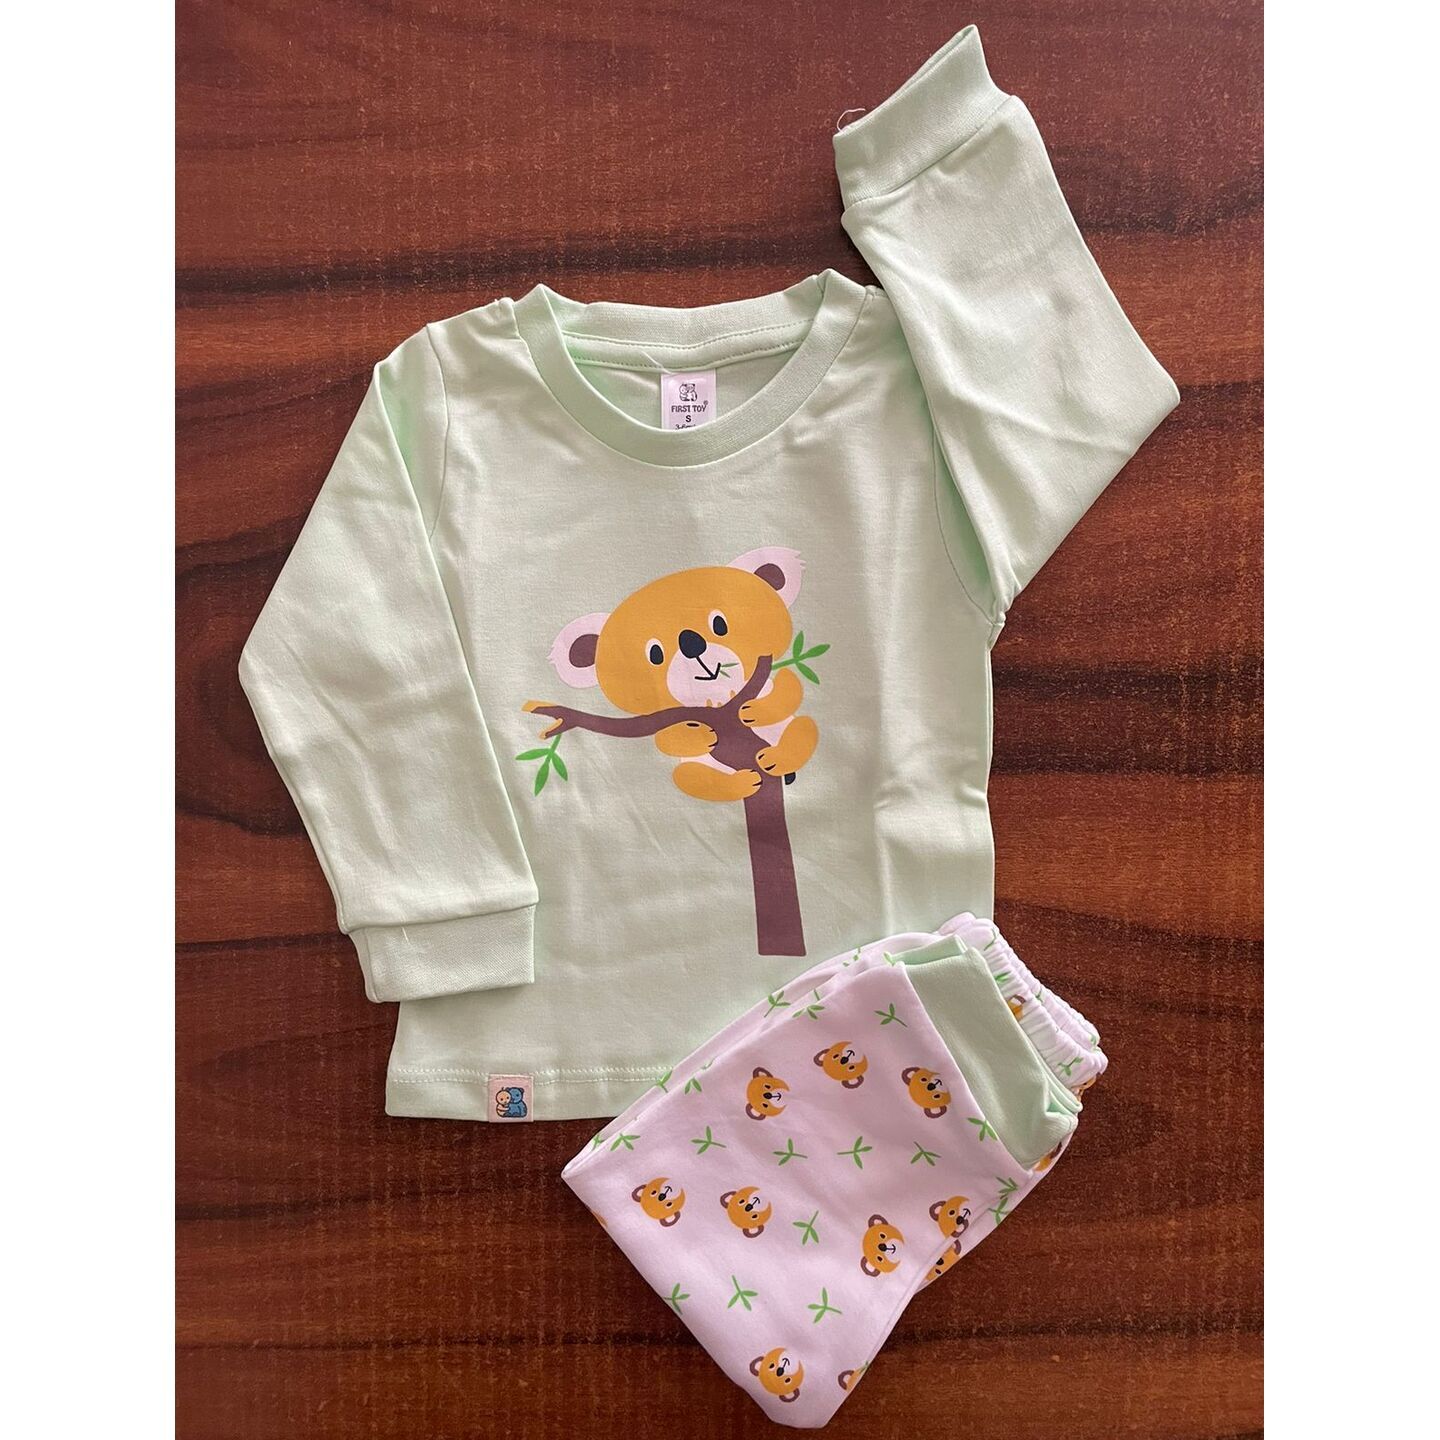 Newborn Infant Kids First Toy Full Sleeves Sets / Night Wear Set upto 12 Months